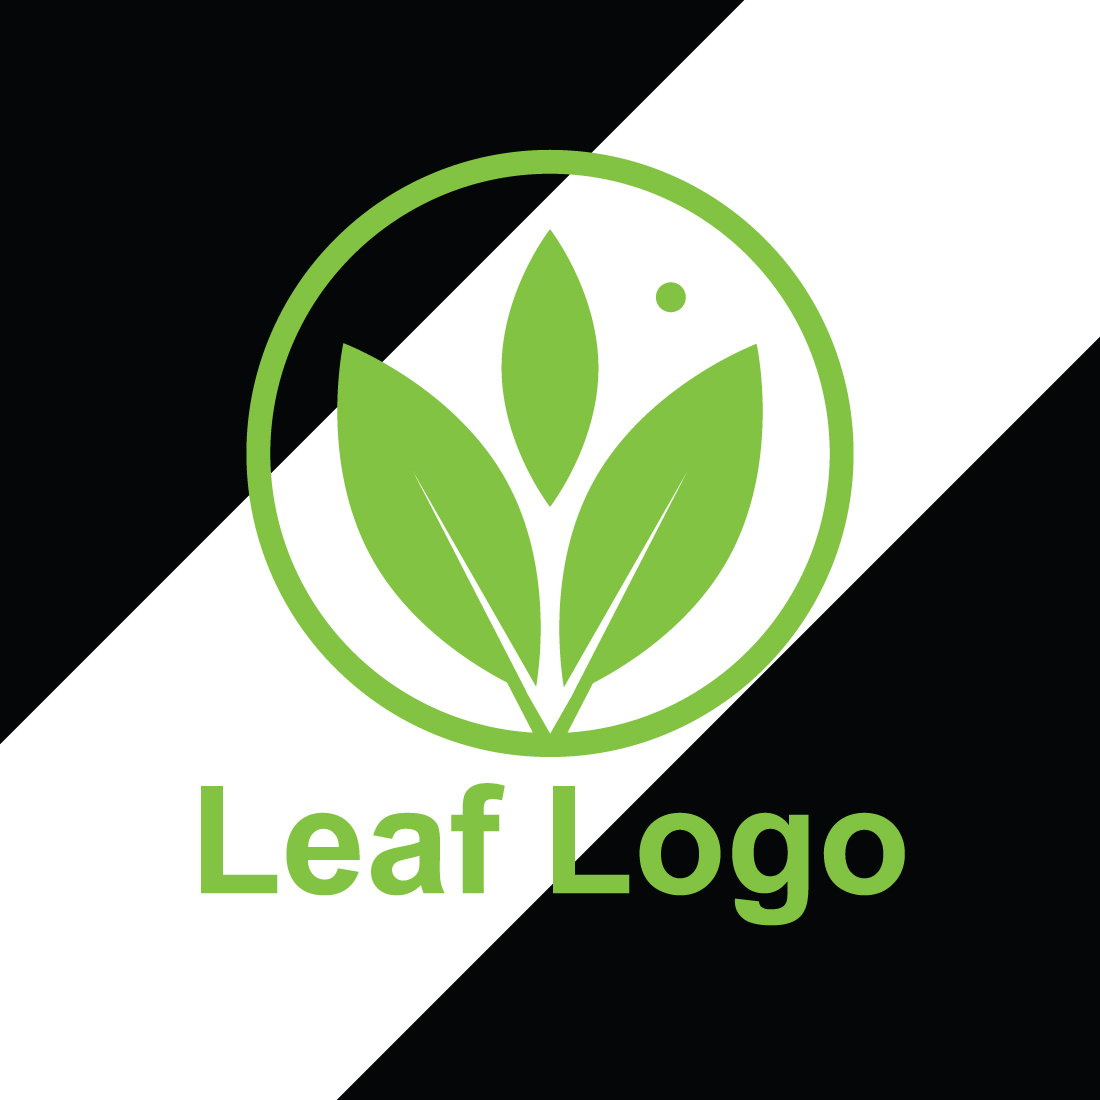 Round colored leaf logo design Royalty Free Vector Image